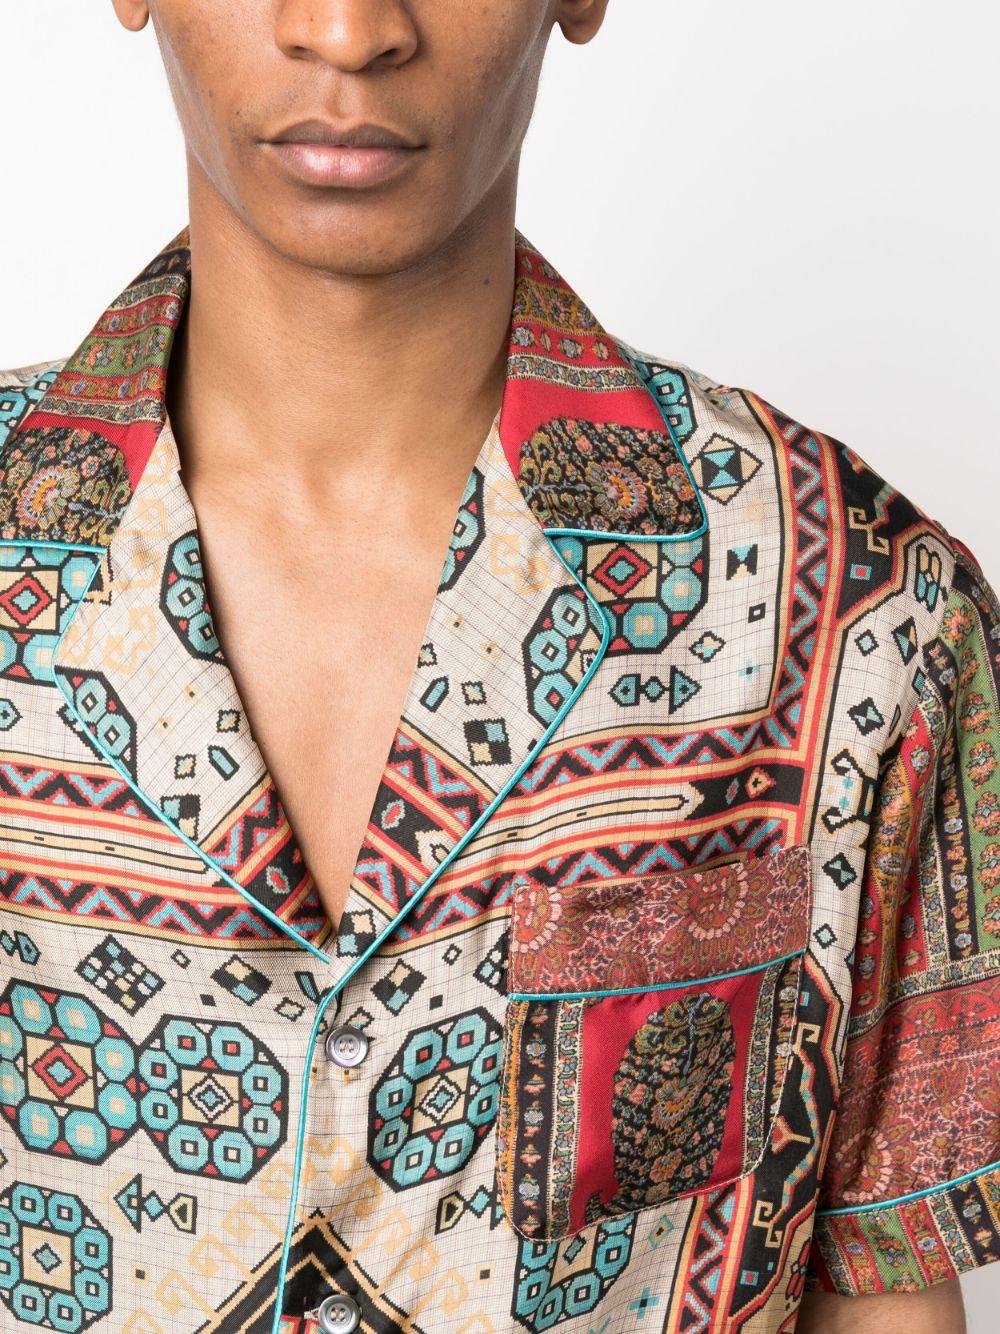 Pierre-Louis MASCIA- Printed Silk Shirt- Woman- M - Multicolor